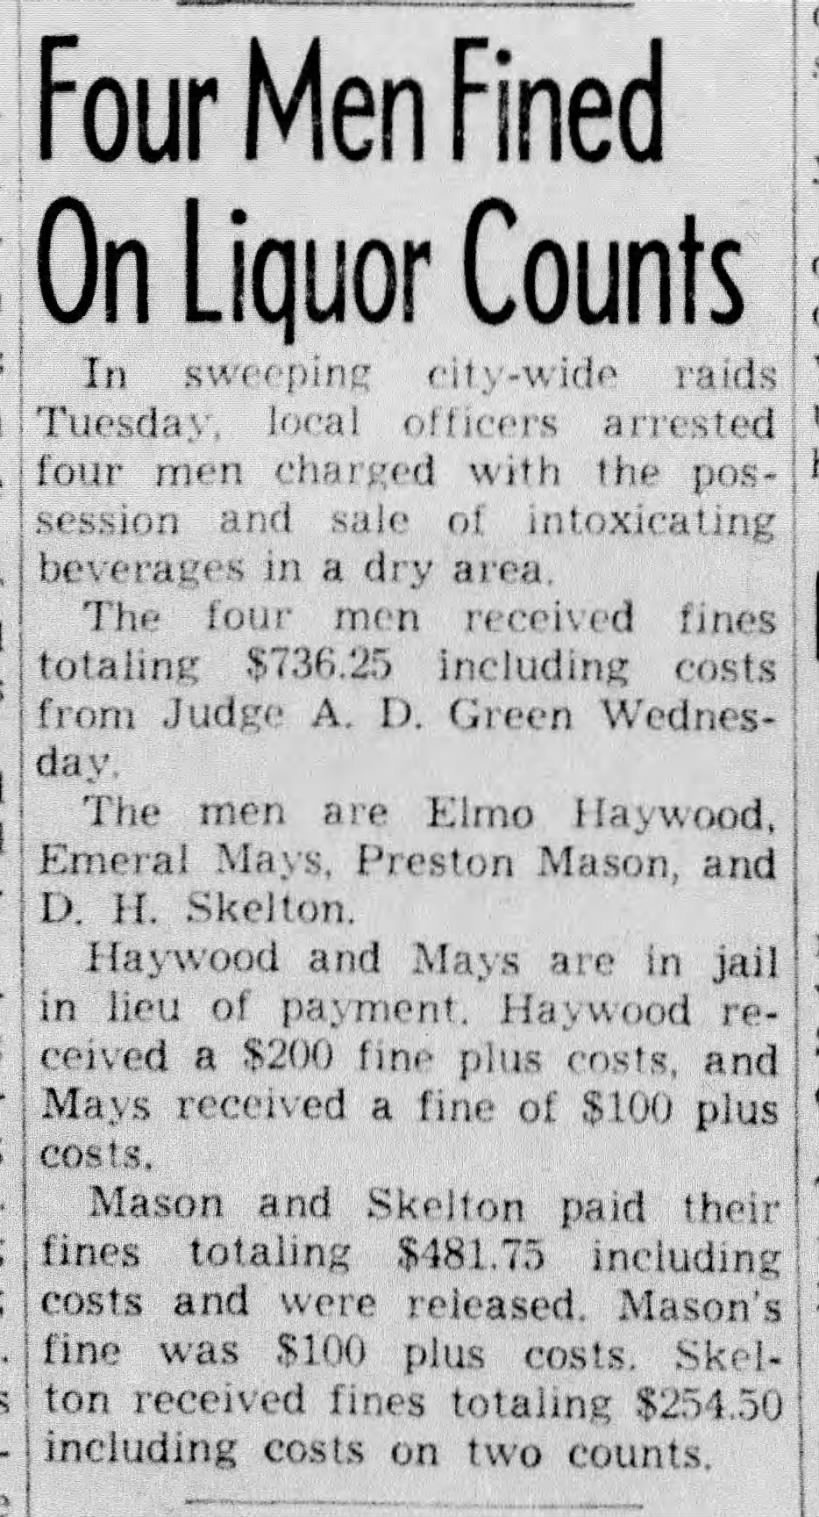 Haywood, The Vernon Daily Record, 19 Jun 1952 p1 c6